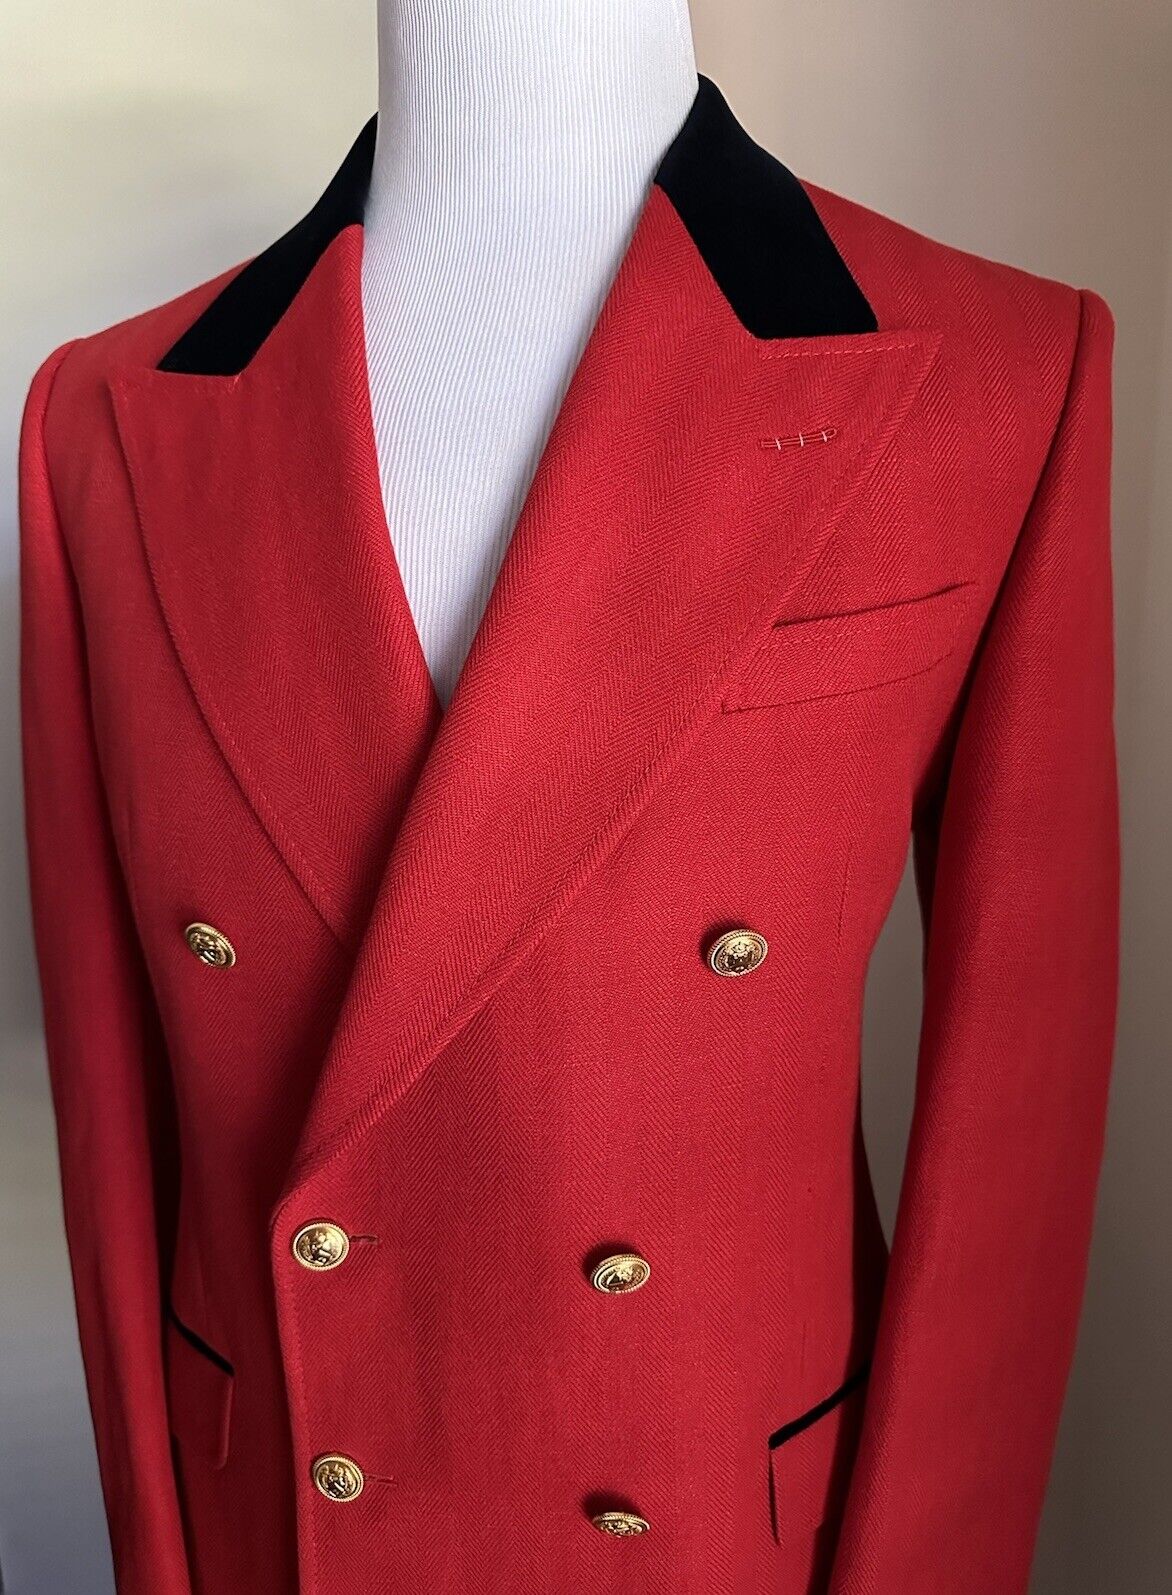 Gucci Men Linen/Wool Double Breasted Sport Coat Blazer Red 42 US/52 Eu NWT $3150